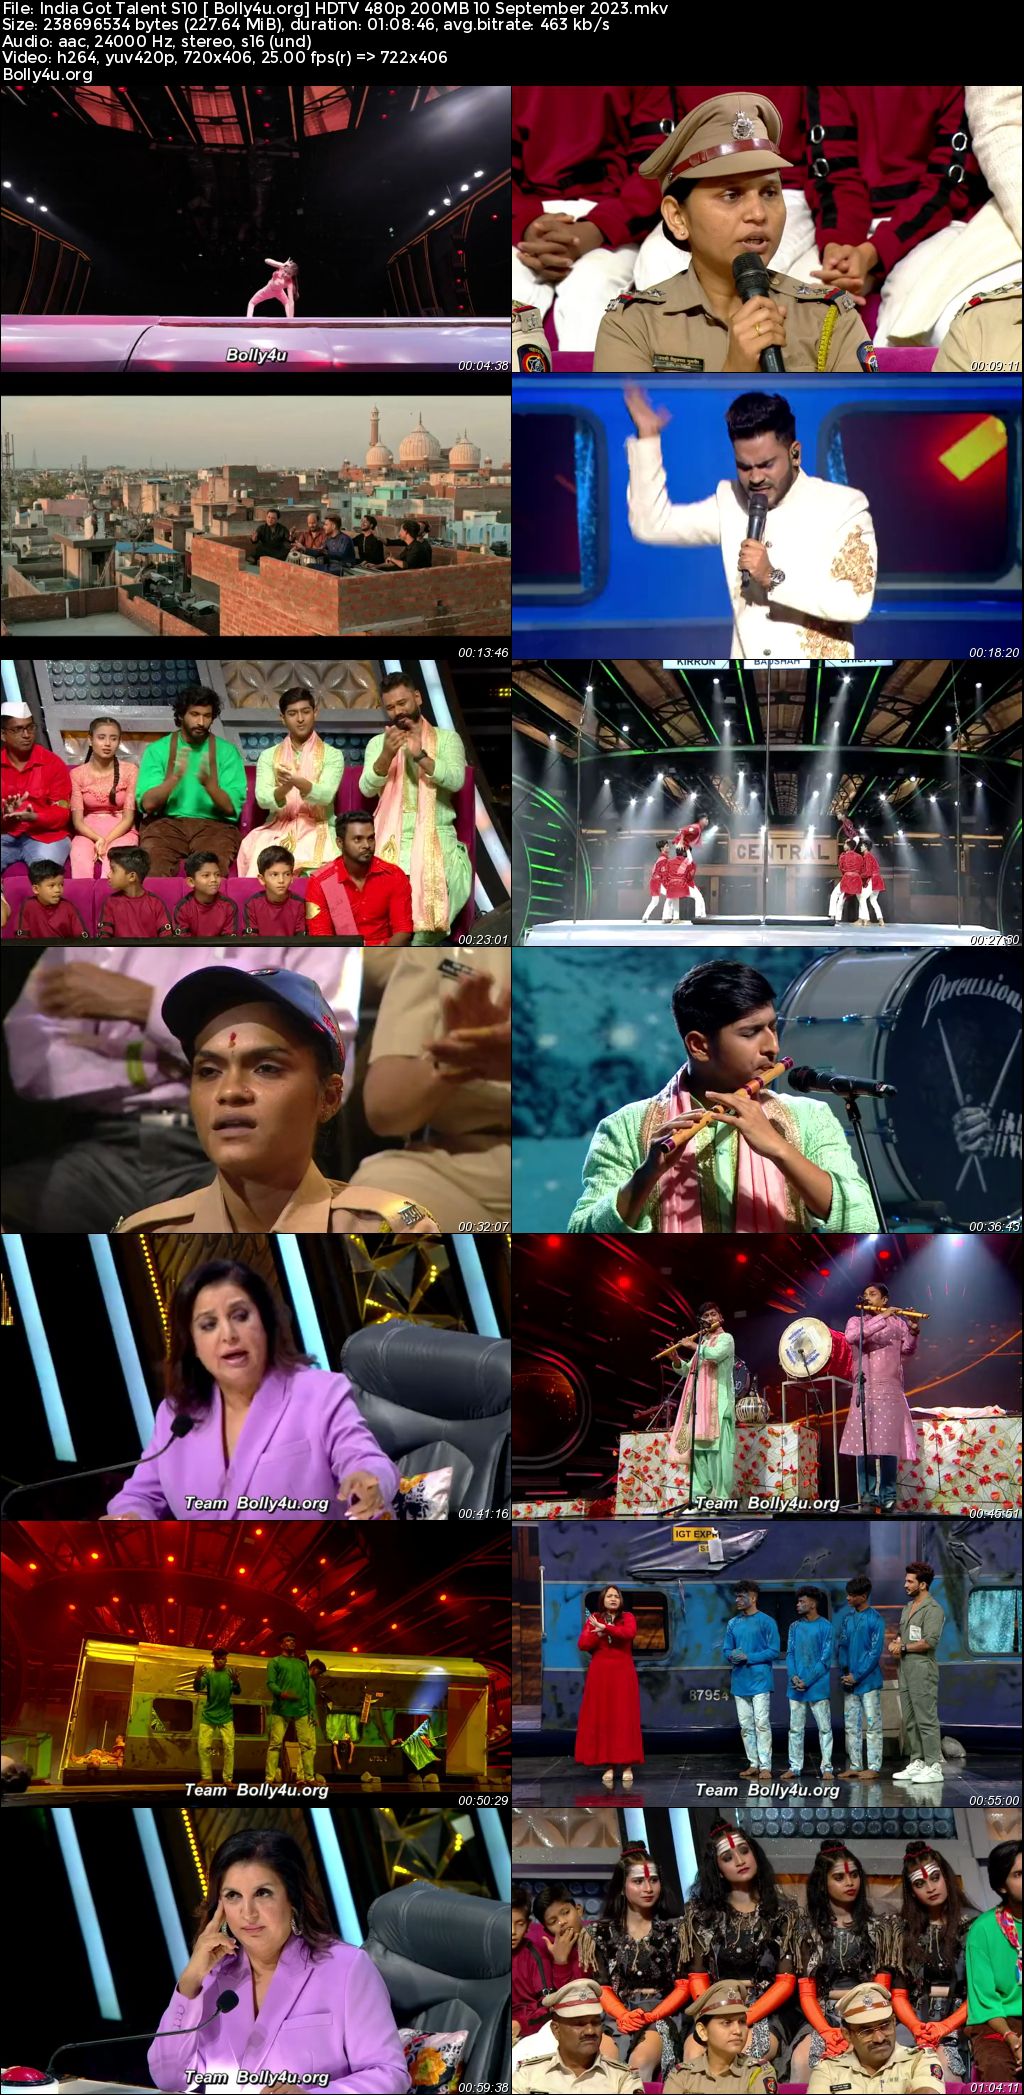 India Got Talent S10 HDTV 480p 200MB 10 September 2023 Download